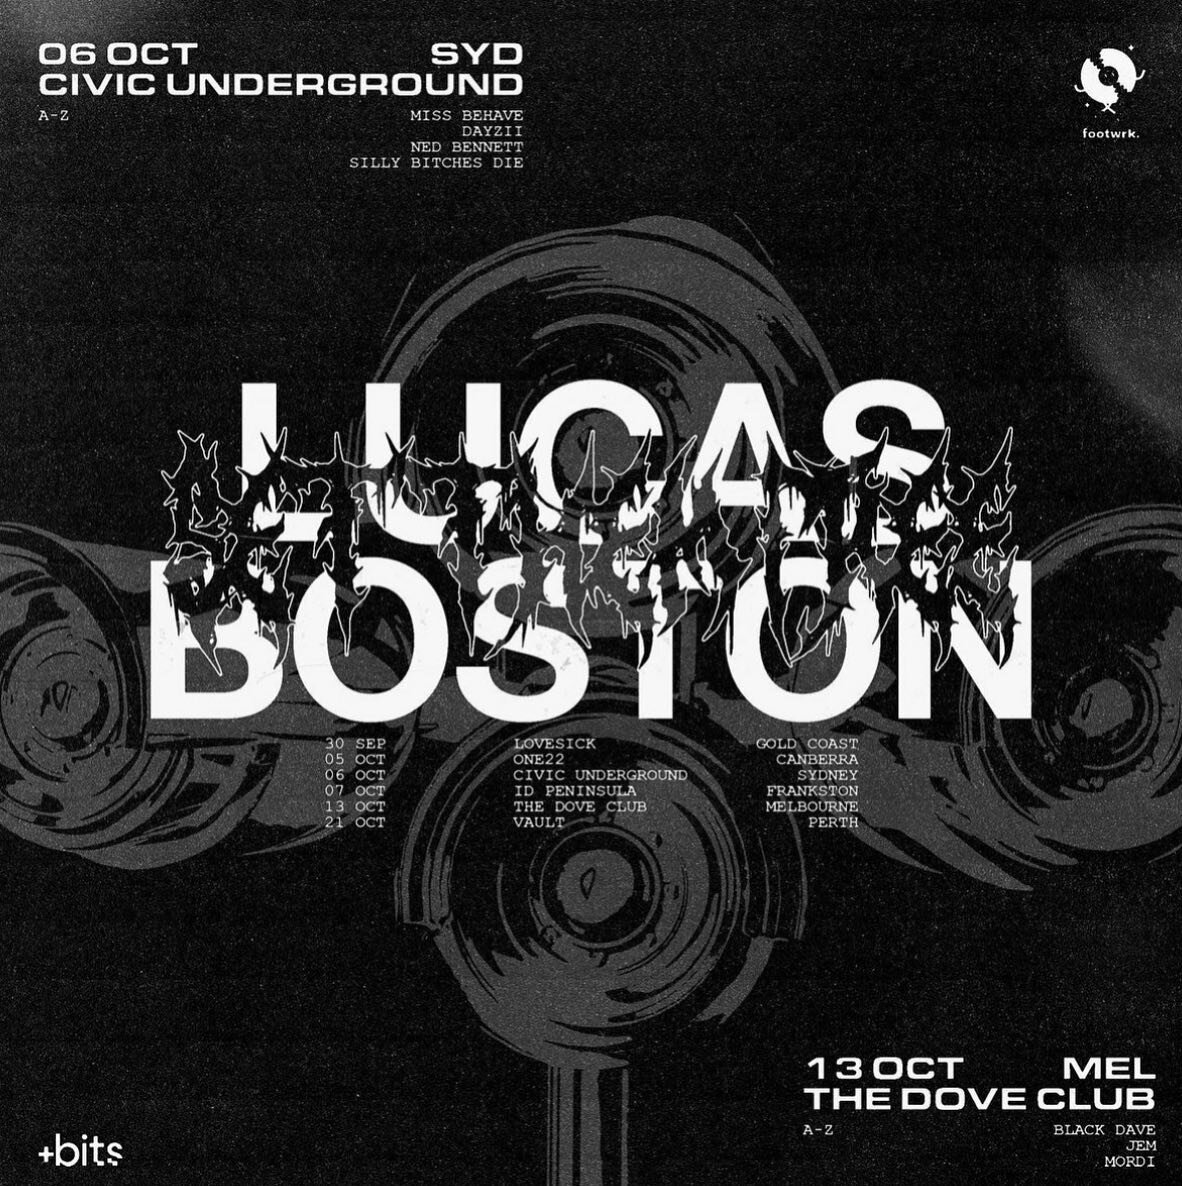 LUCAS BOSTON / FRIDAY 13th OCT
tickets on the door xX